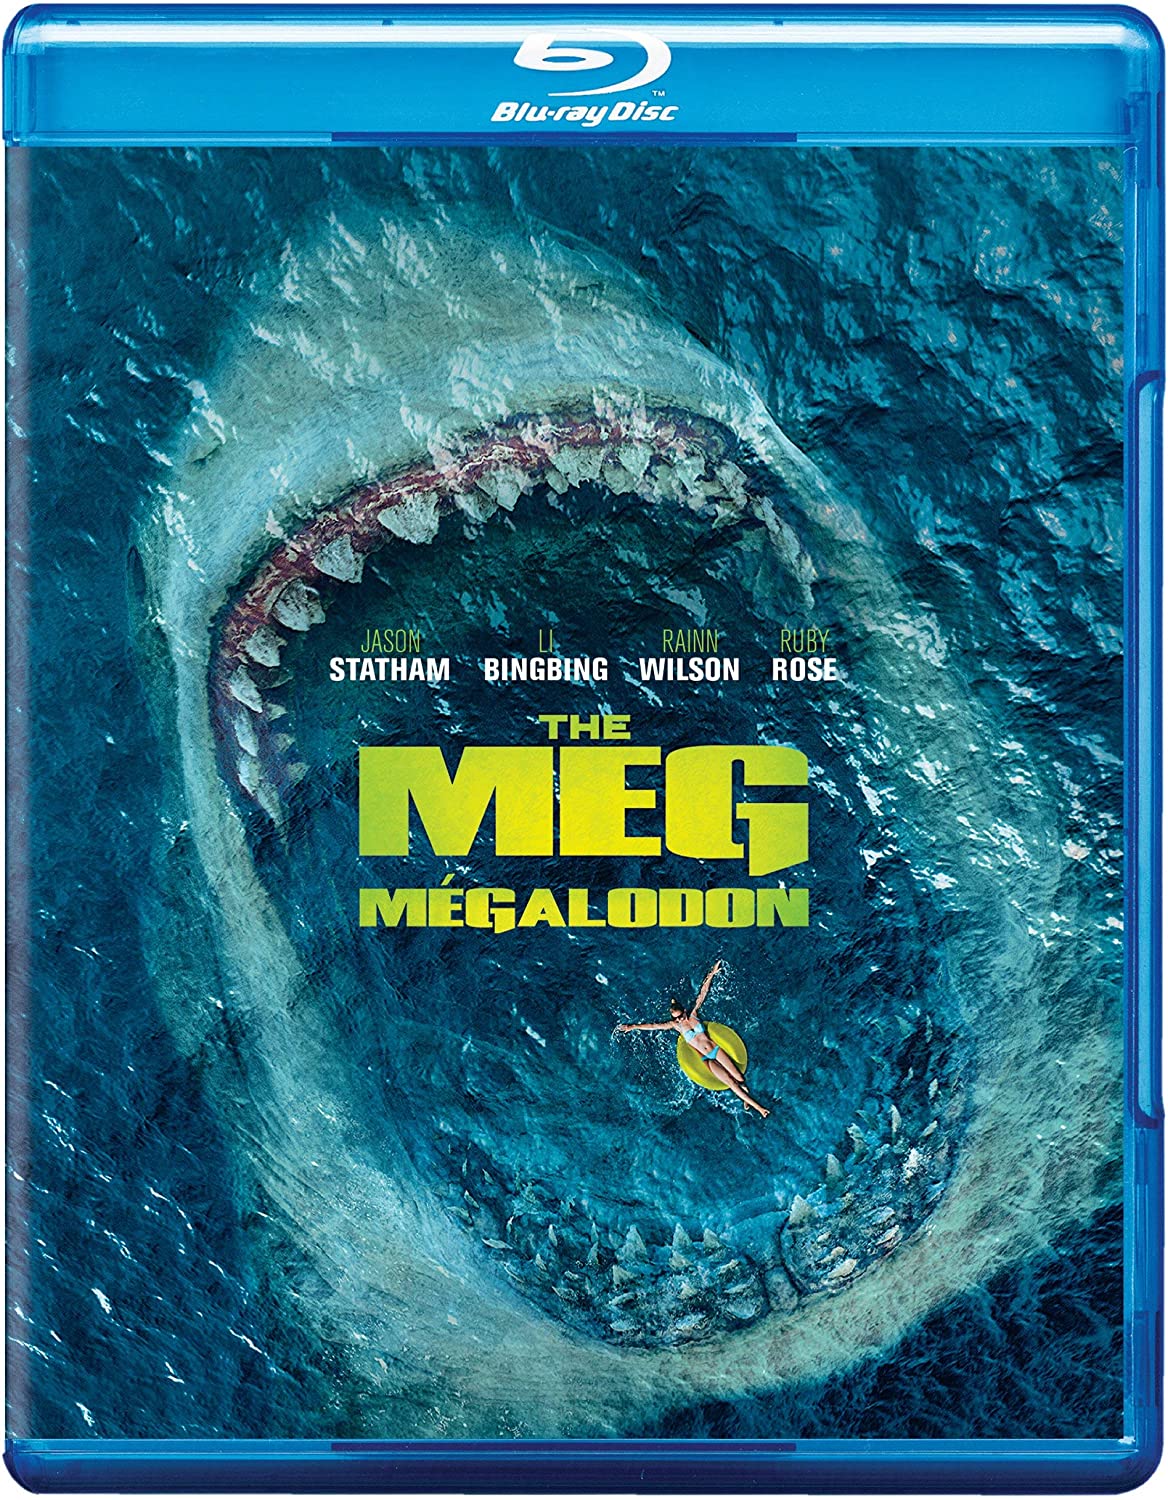 The Meg (Bluray/DVD Combo) [BluRay]